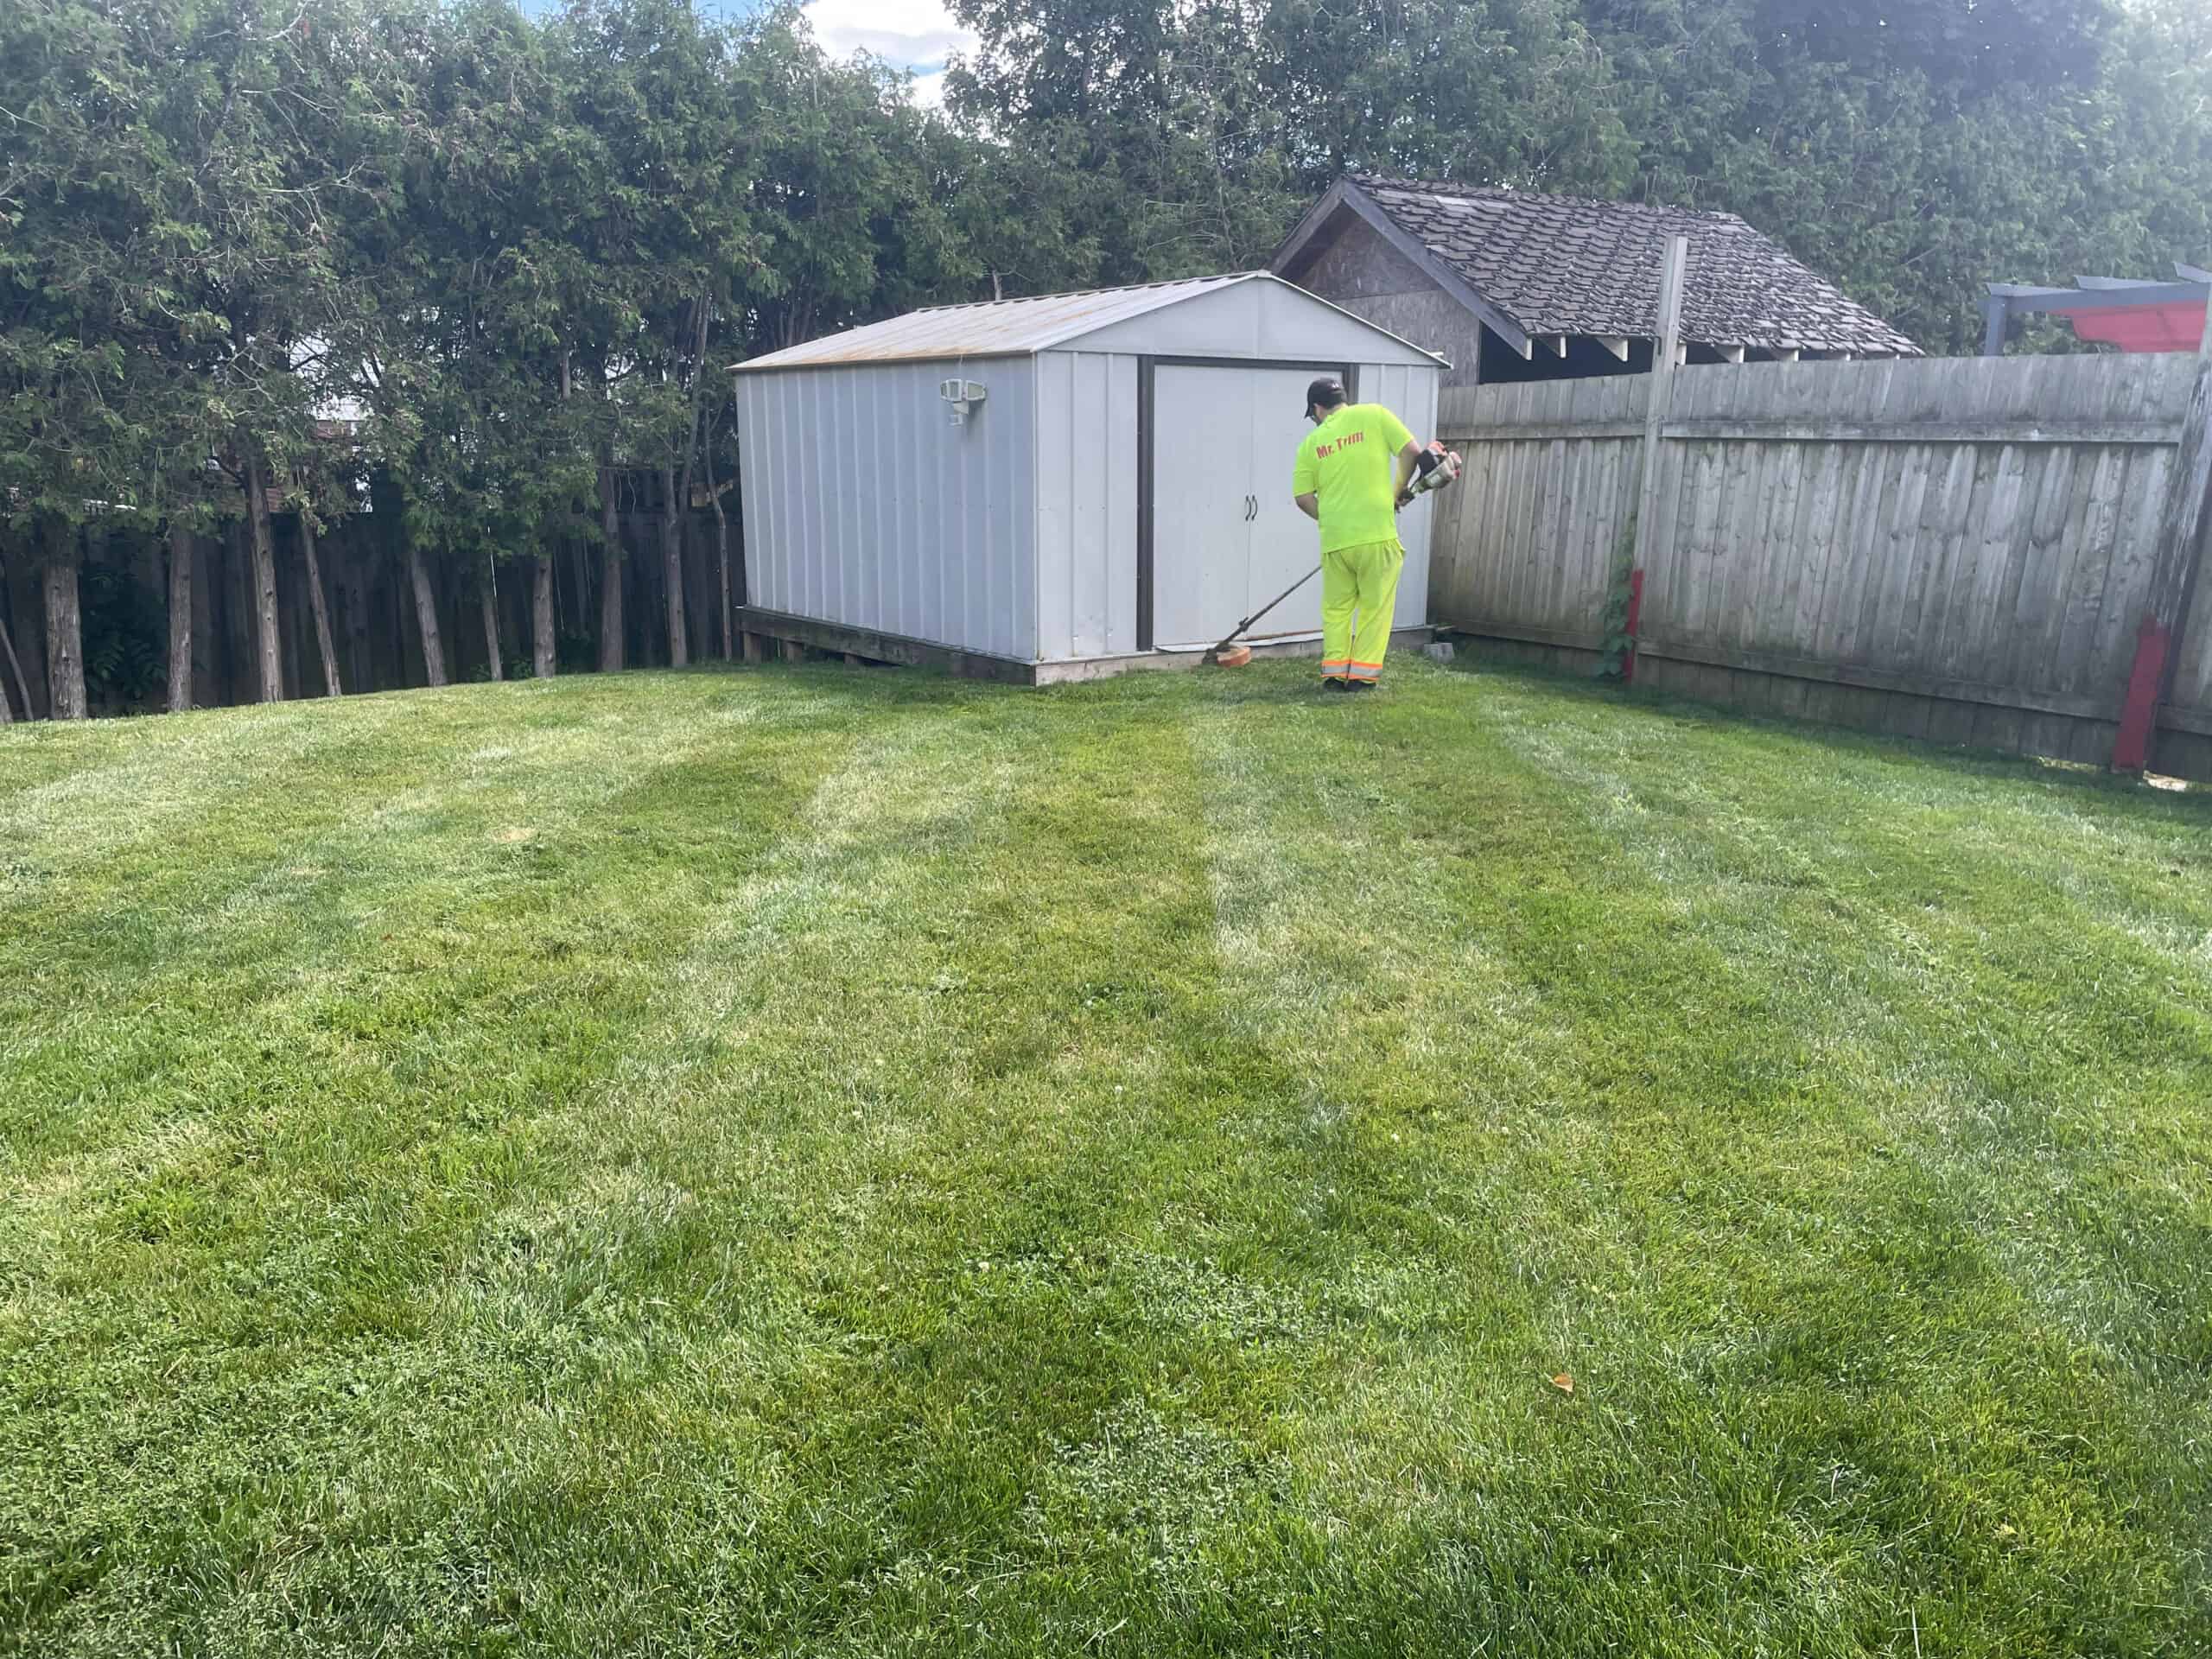 Lawn care with fertilizer